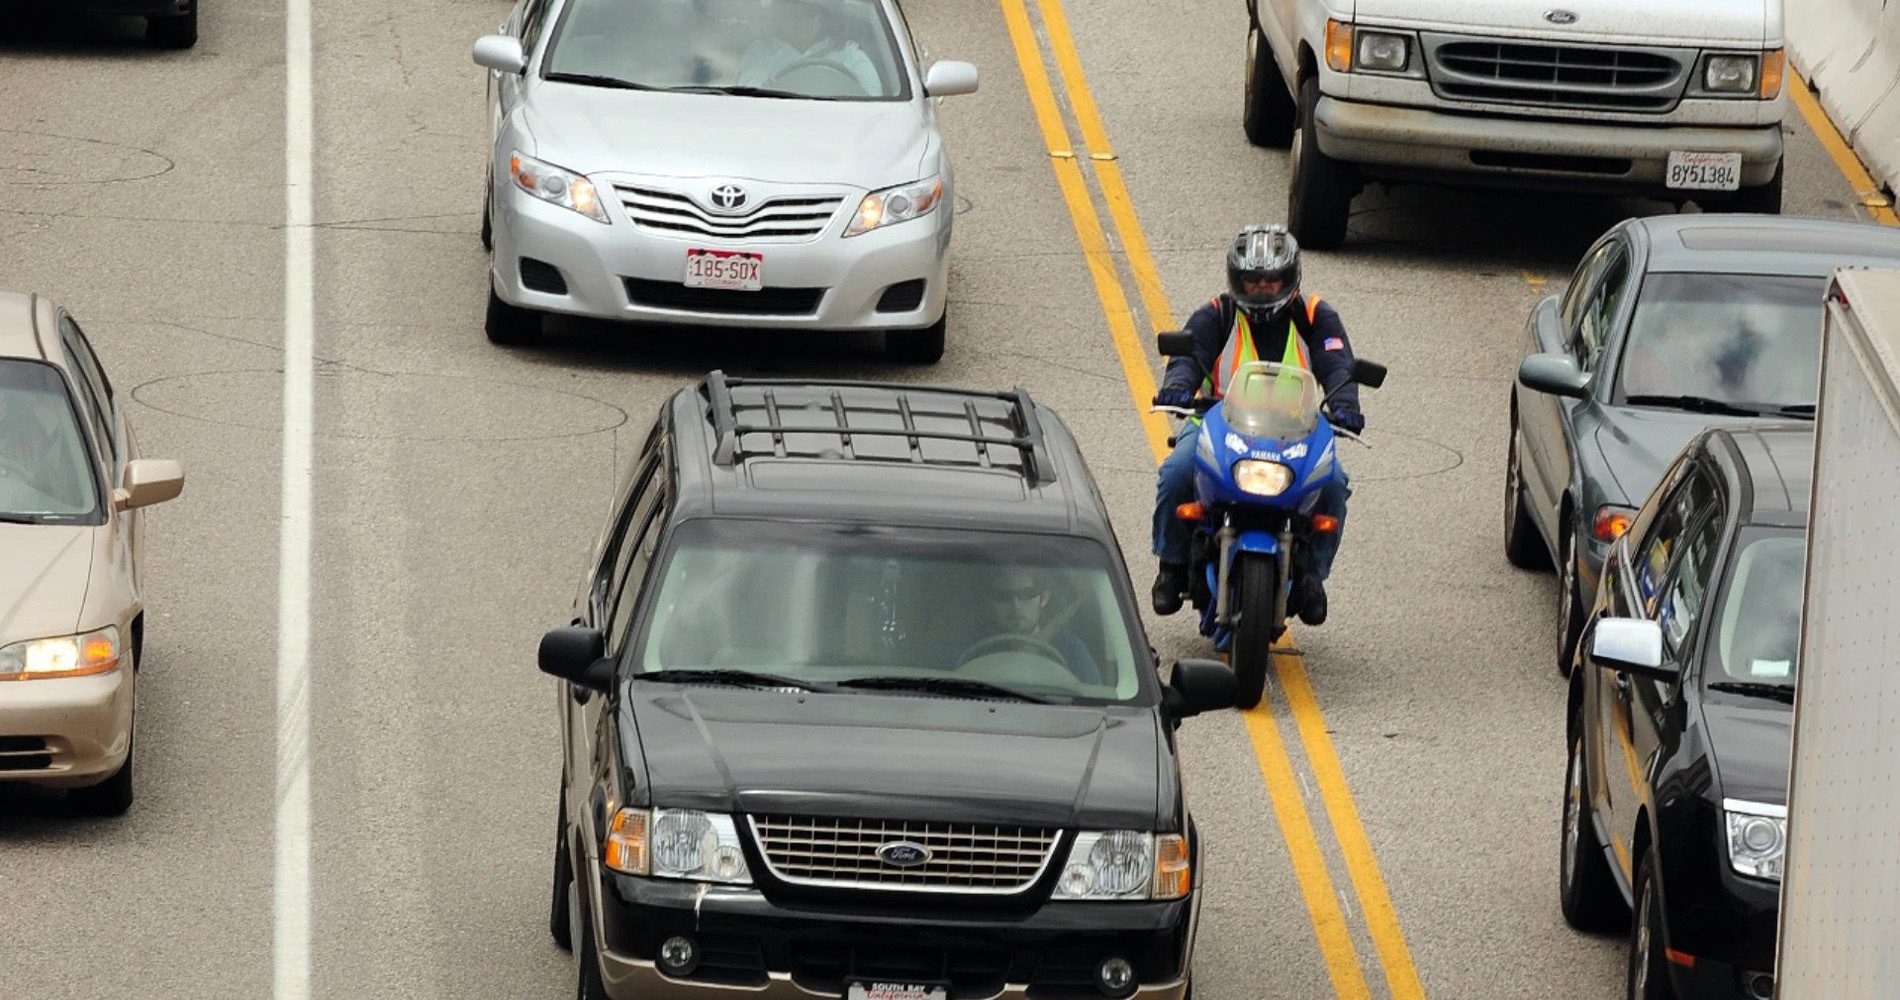 Motorcyclist filtering lanes in American road